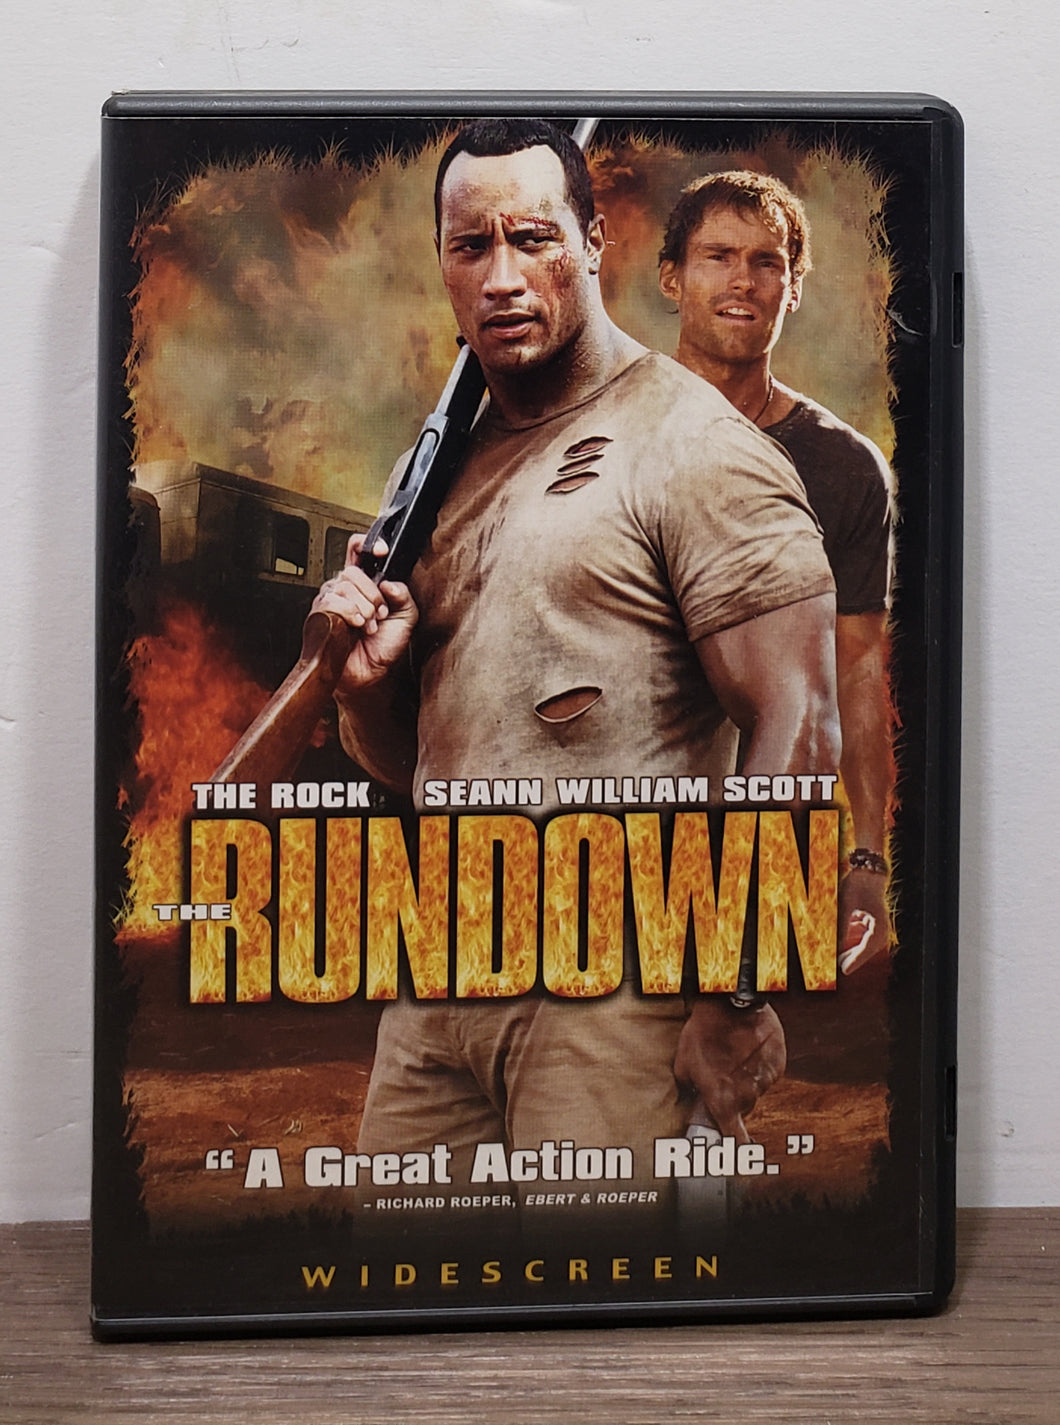 The Rundown (Widescreen Edition)